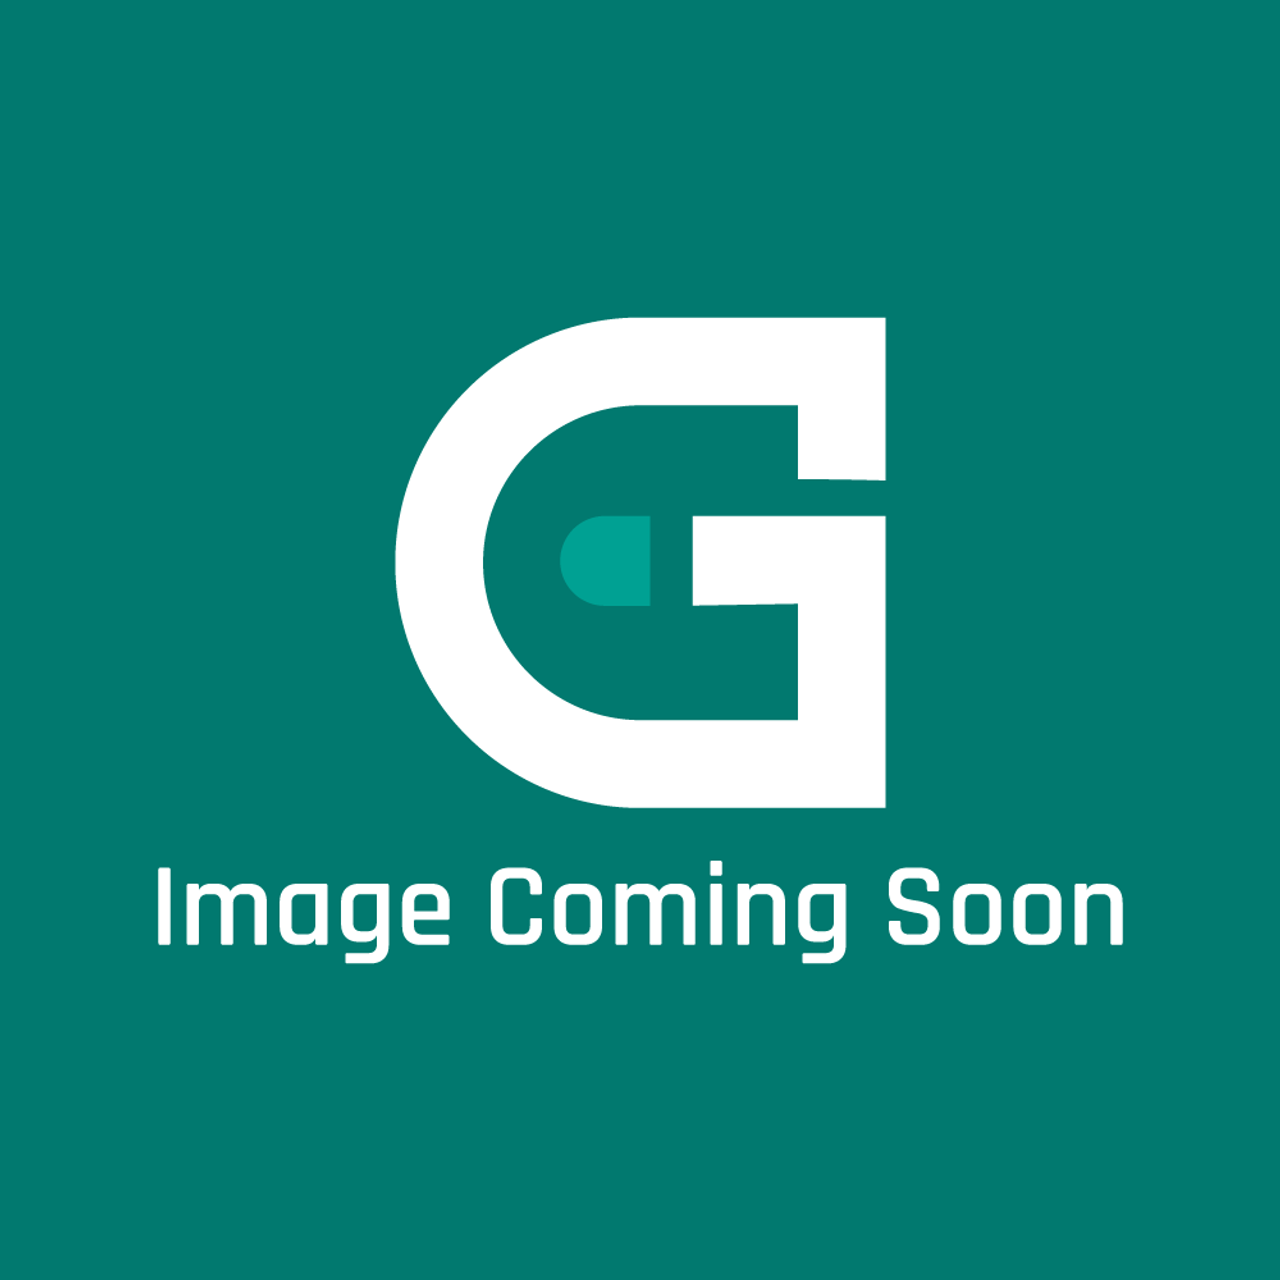 GE Appliances WE14M104 - Dryer Gas Burner - Image Coming Soon!